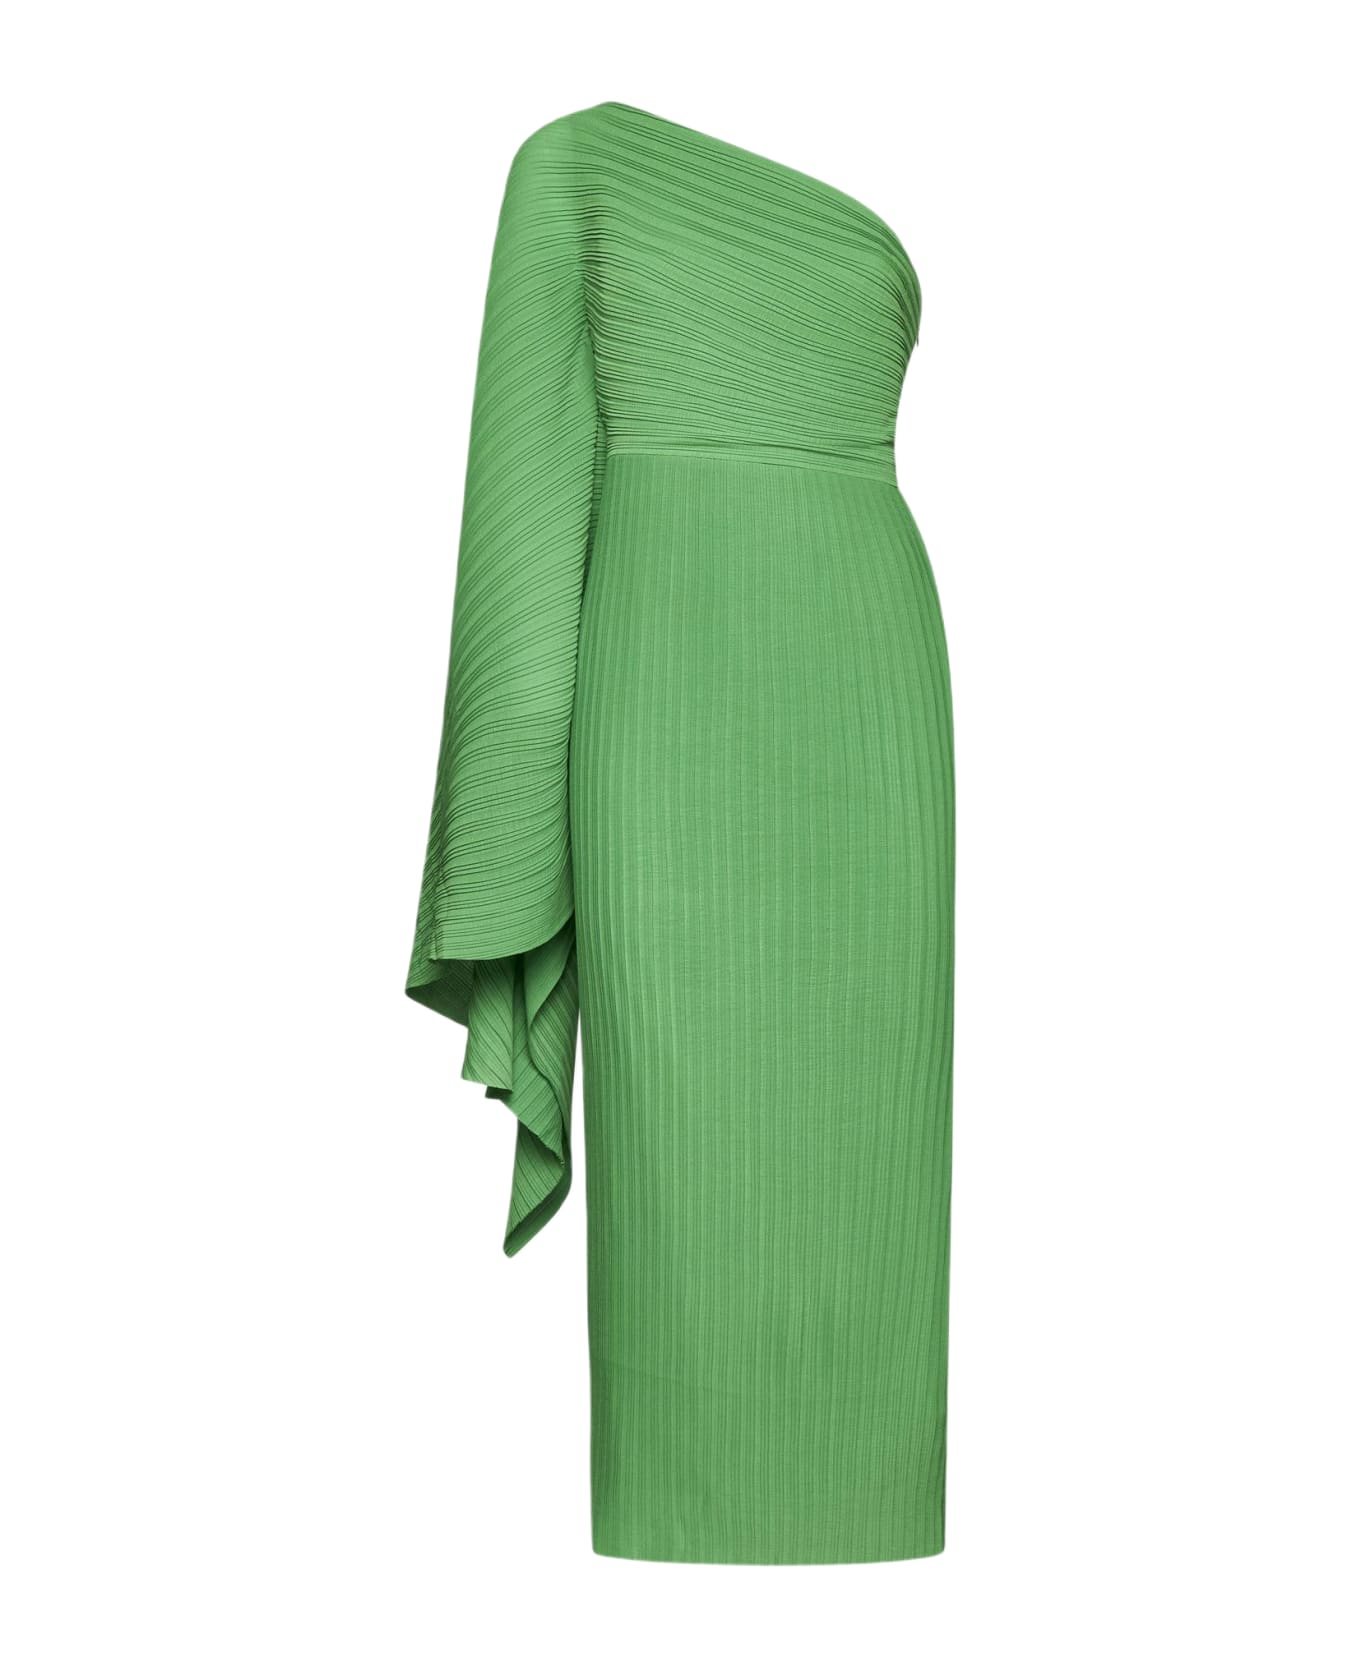 Solace London Lenna Pleated Crepe Midi Dress - Bright green ワンピース＆ドレス